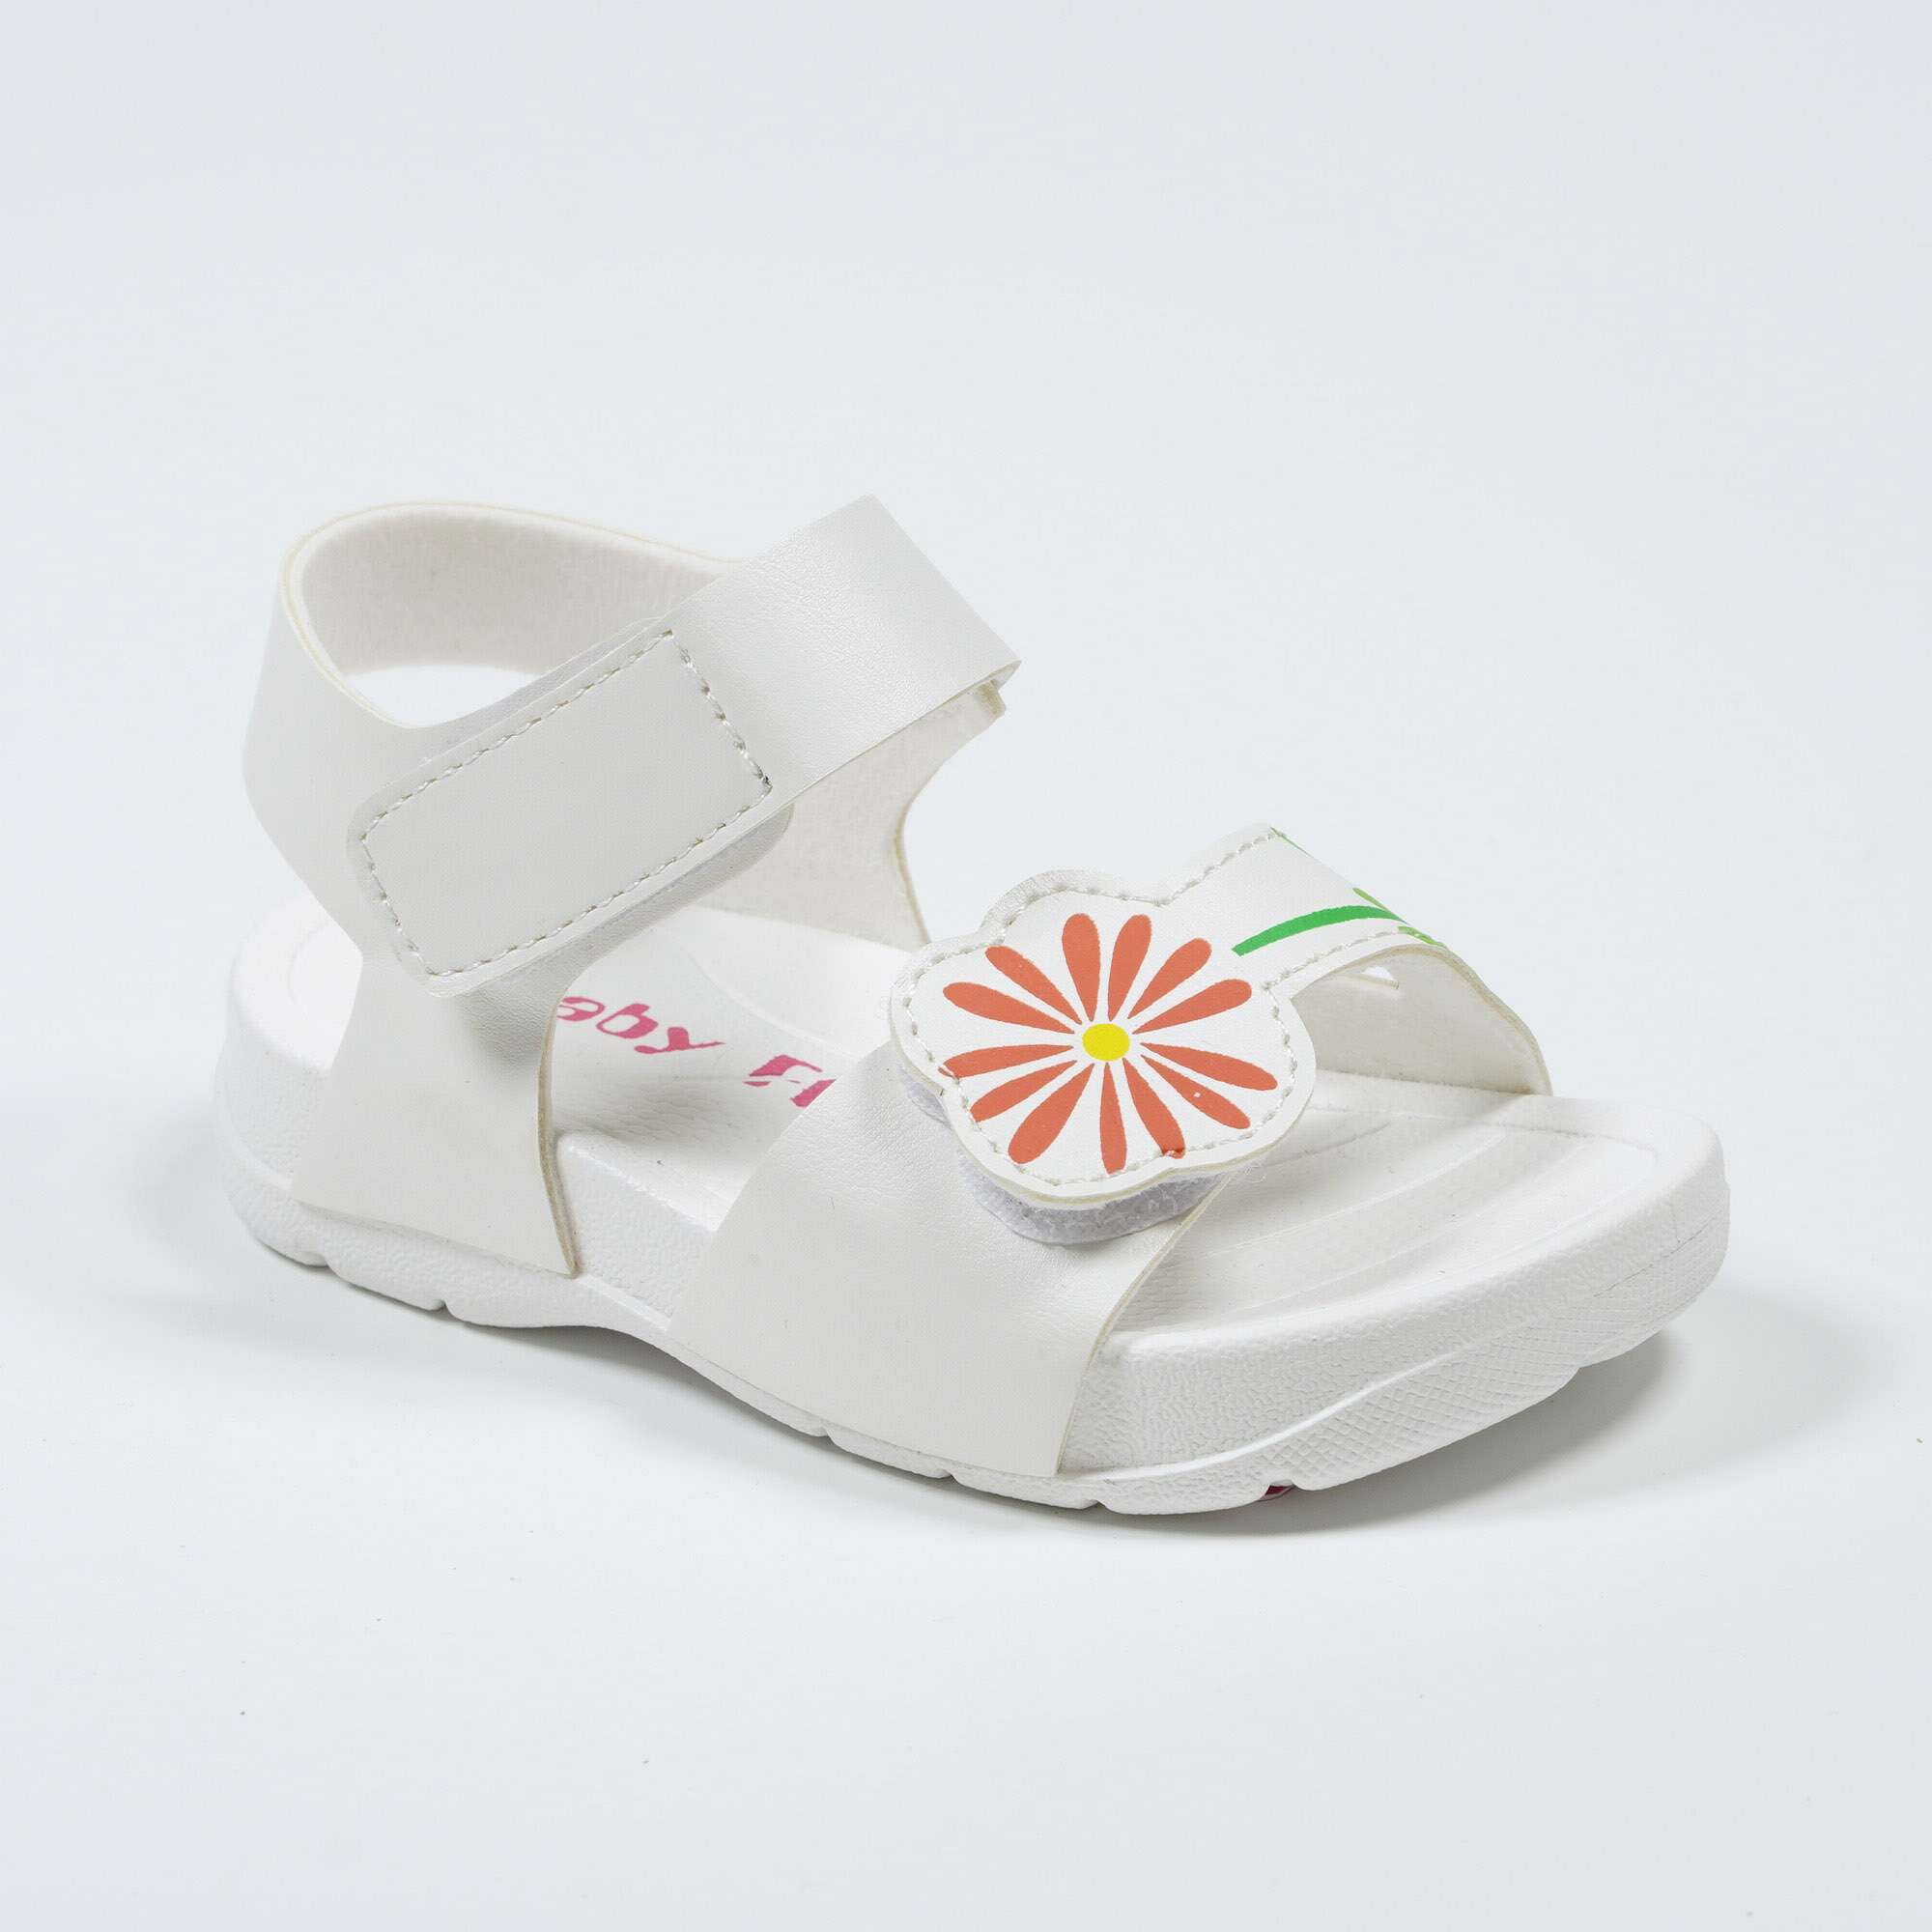 Nikoofly-Wholesale-Flower-Print-Sandals-for-Children-YDX2311C-4-white